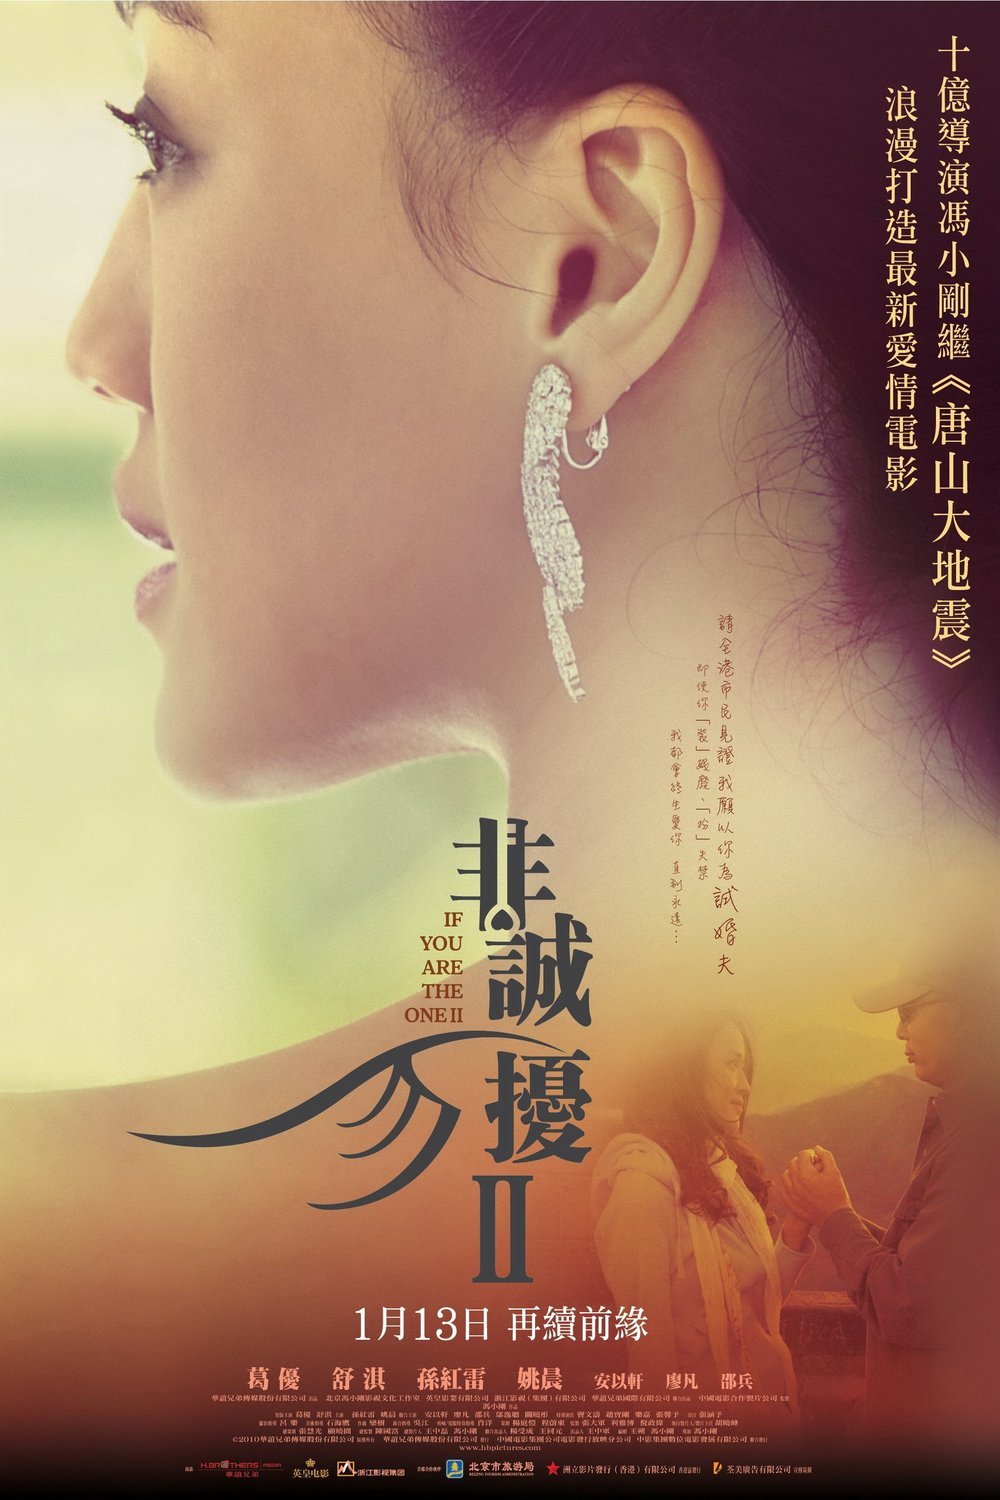 Mandarin poster of the movie Fei cheng wu rao 2